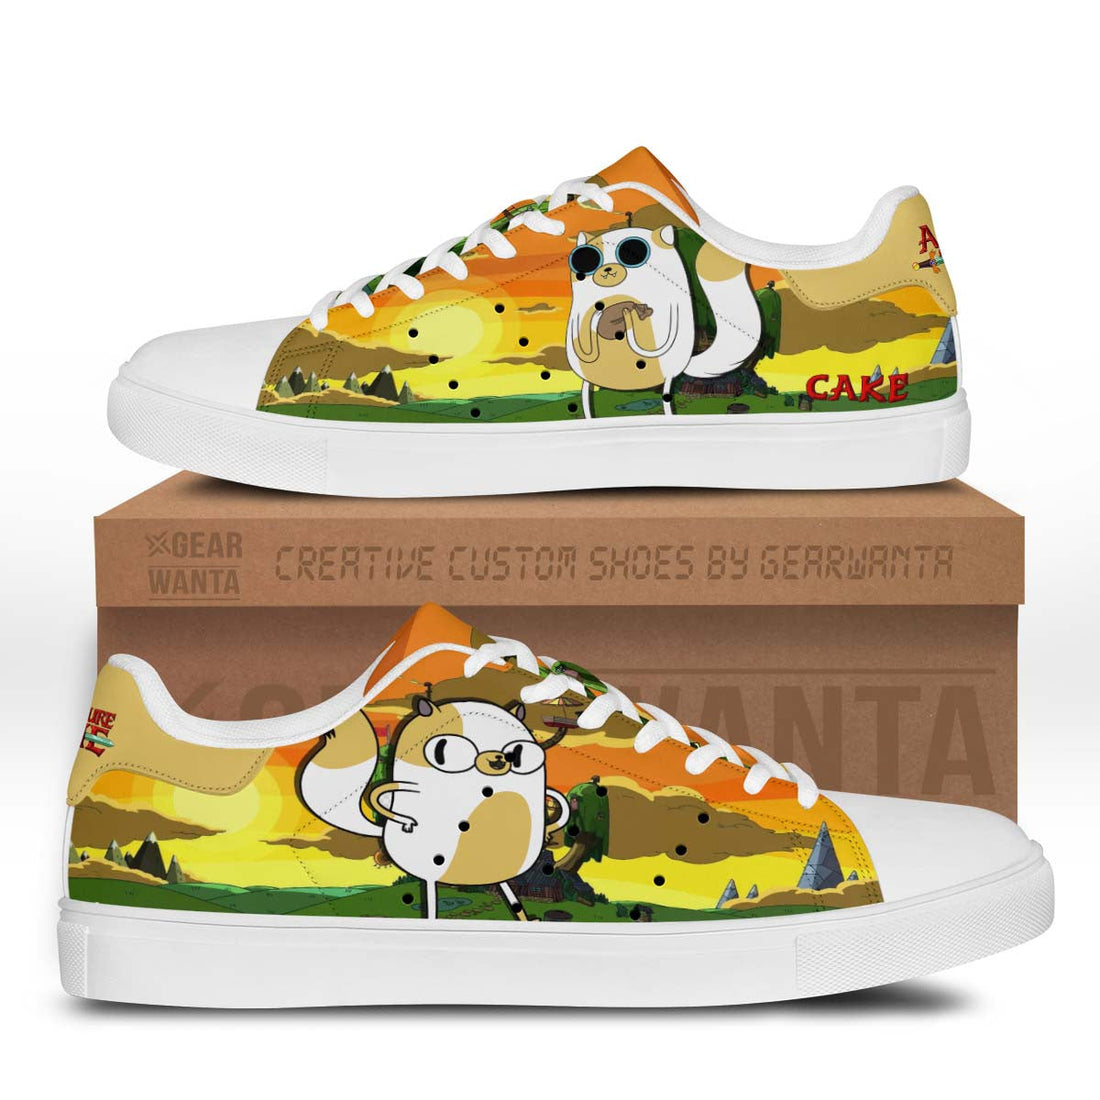 Adventure Time Cake Stan Shoes Custom-Gear Wanta